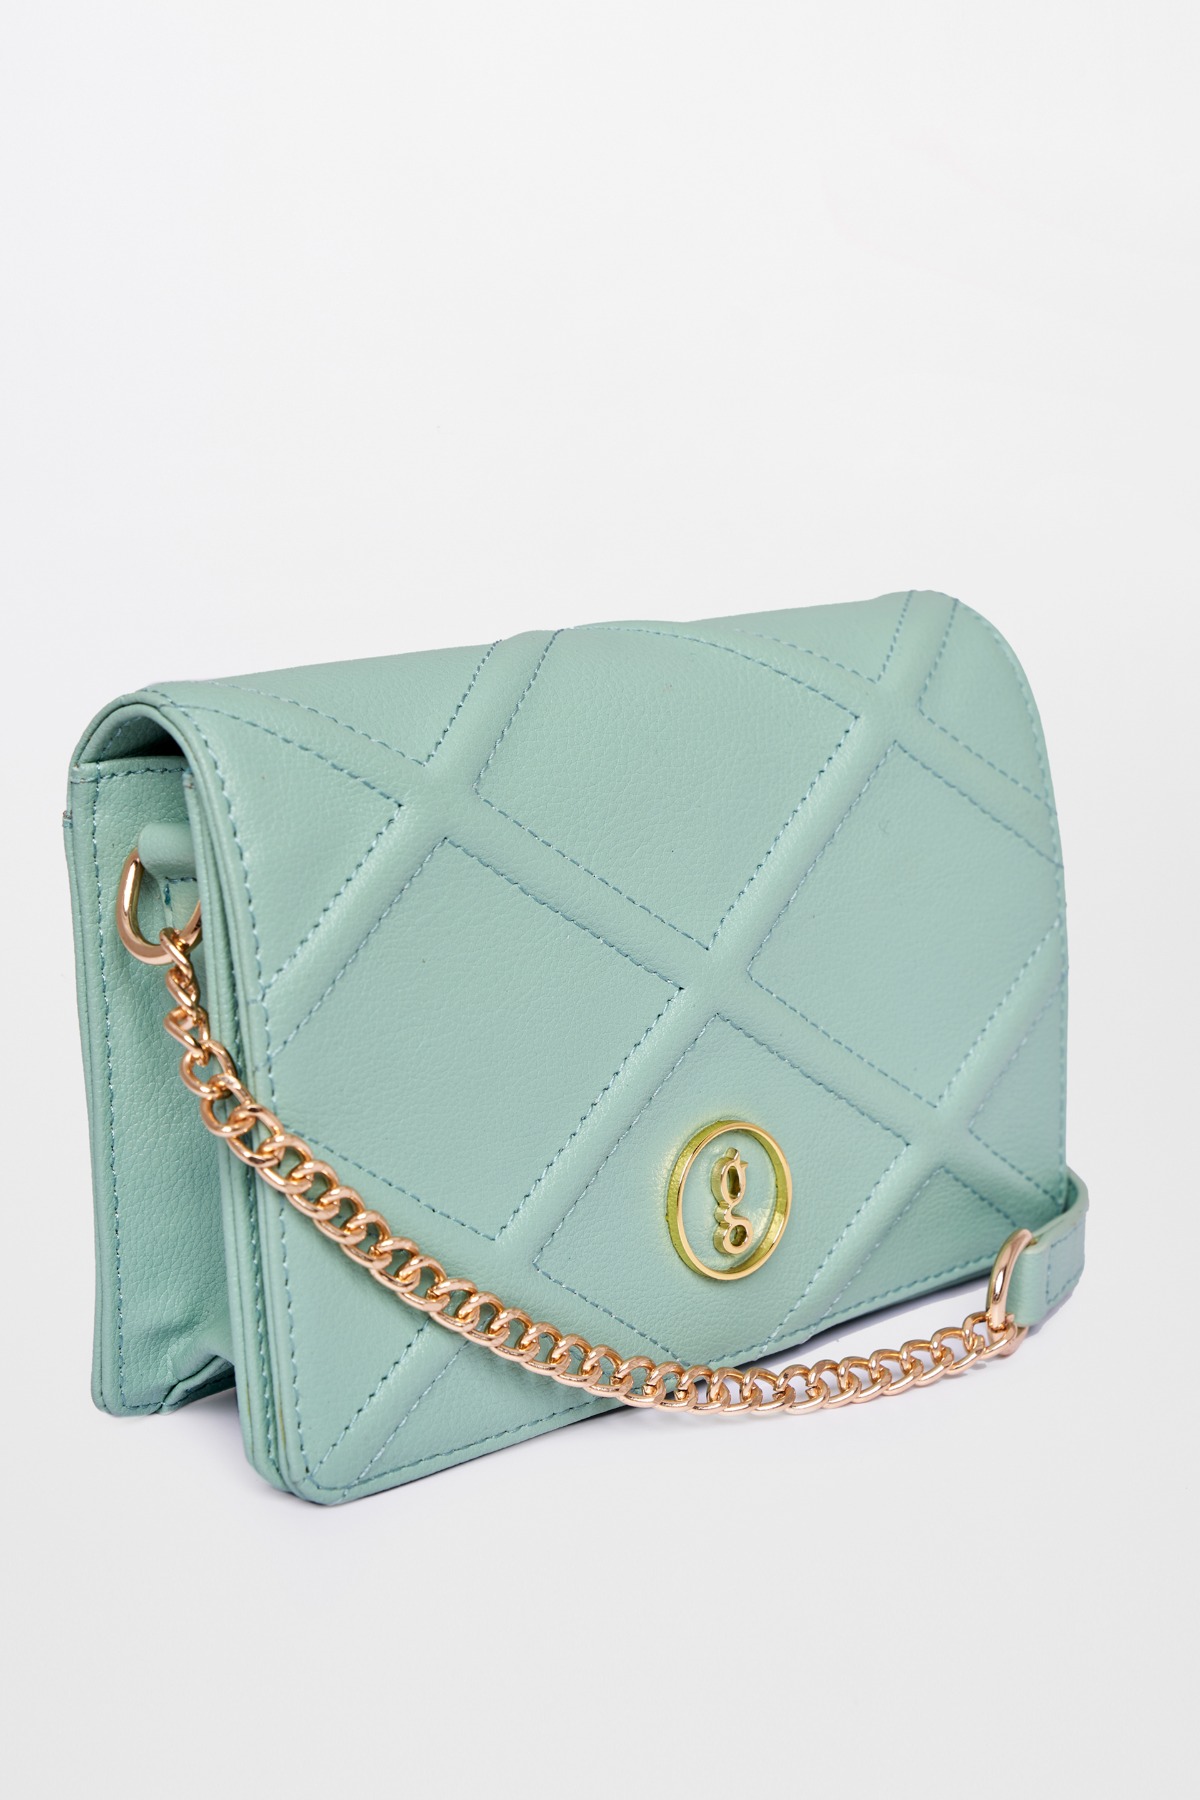 Best Choose for Insulated Lunch Bags for Women - Diana's Women Blog |  Trendy purses, Popular handbags, Fashion handbags